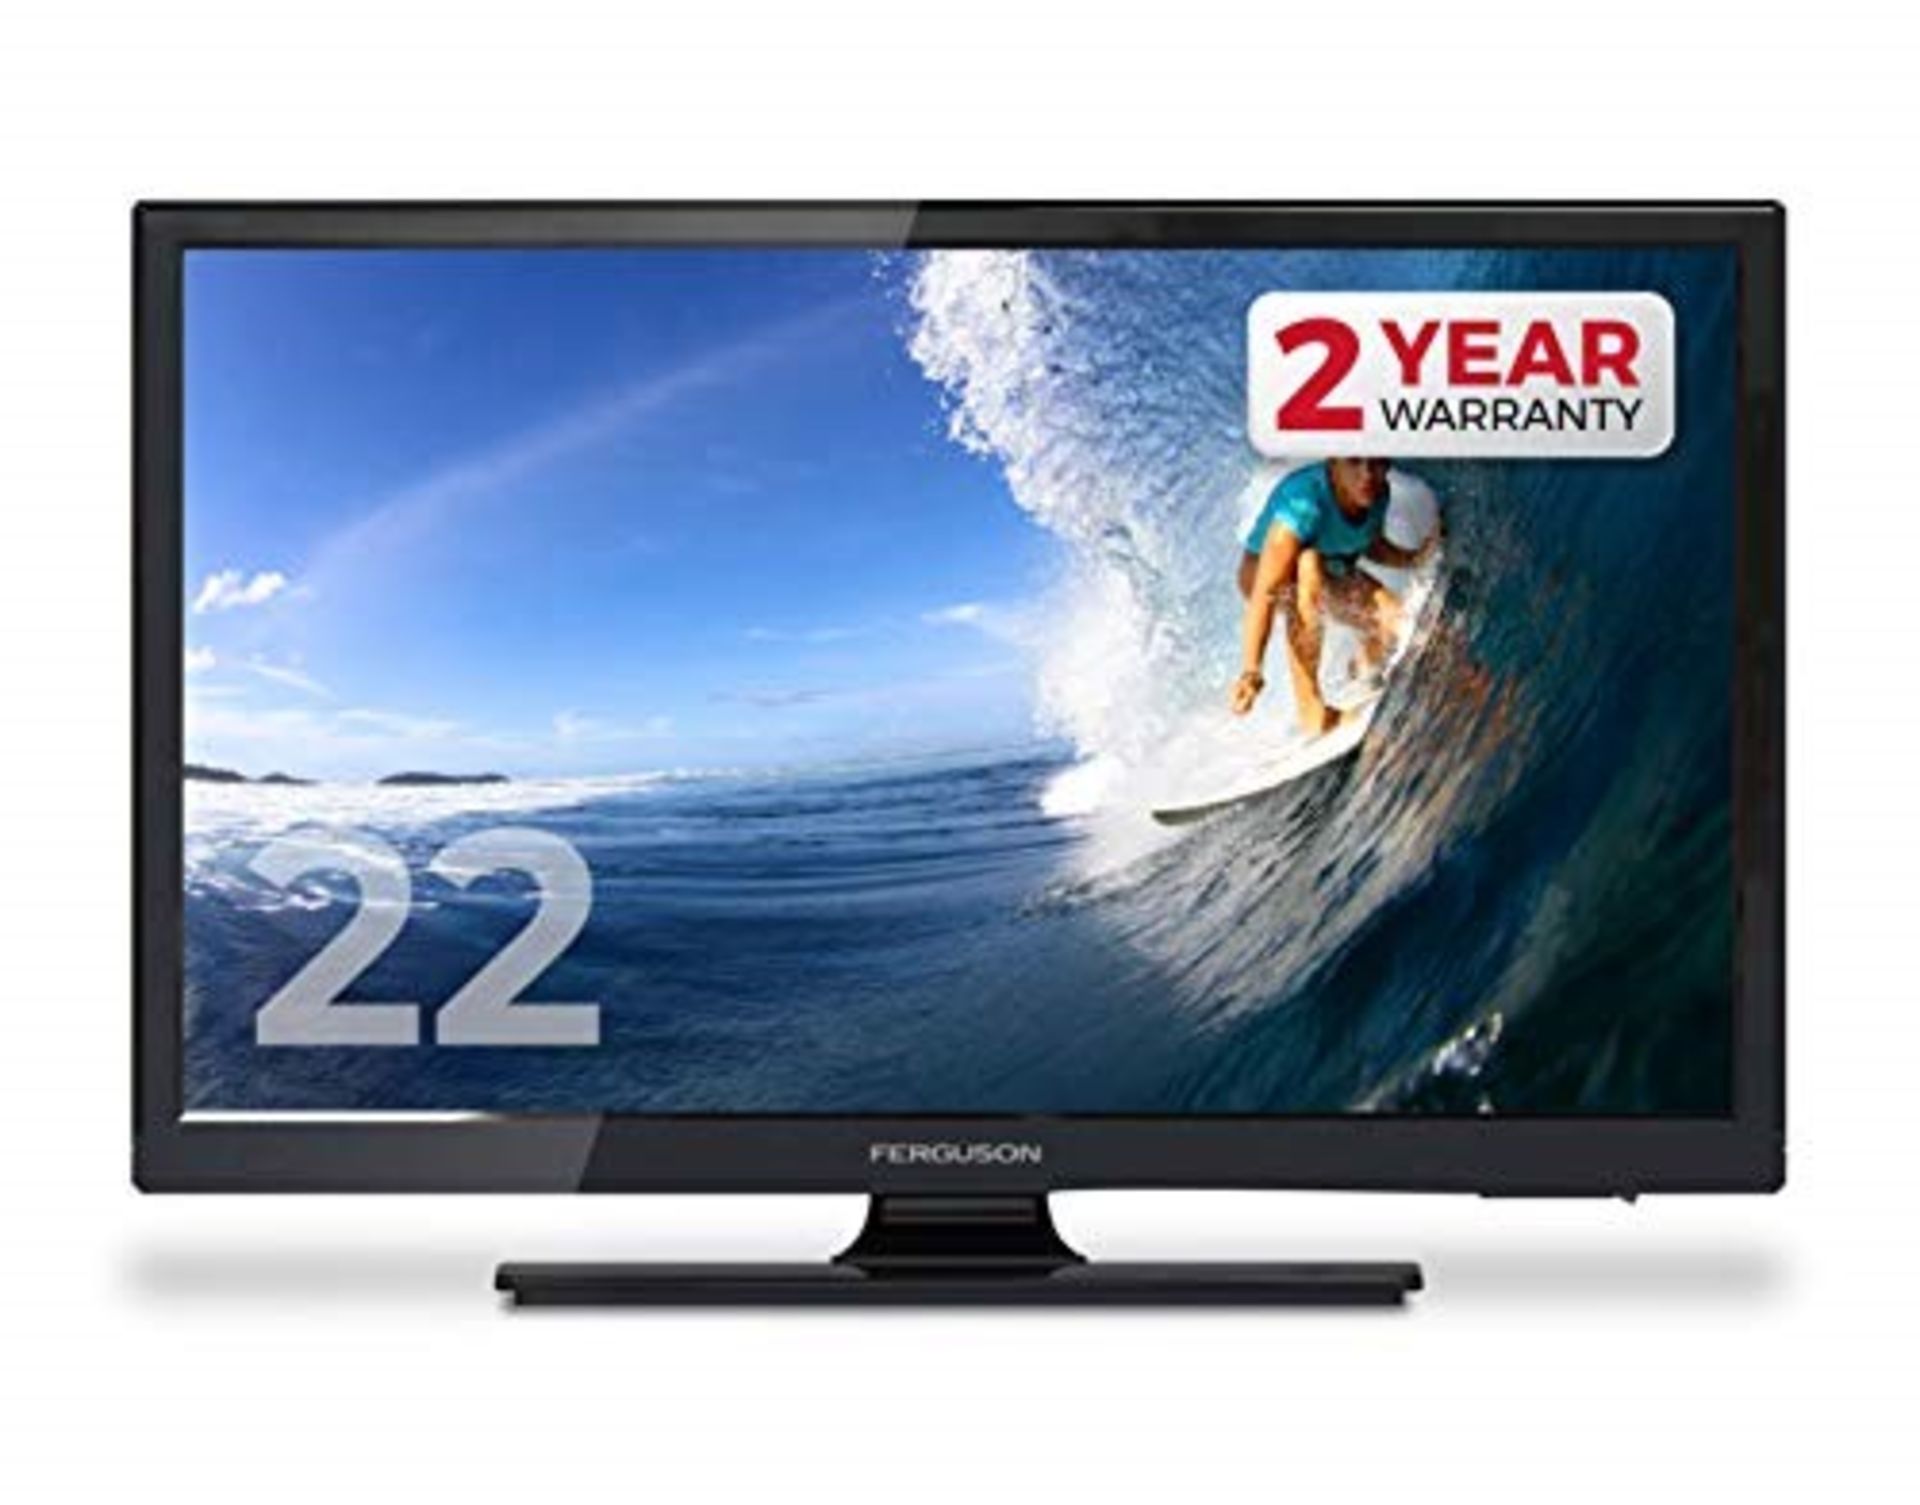 RRP £100.00 Ferguson 22" Full HD LED TV With HD Digital Free